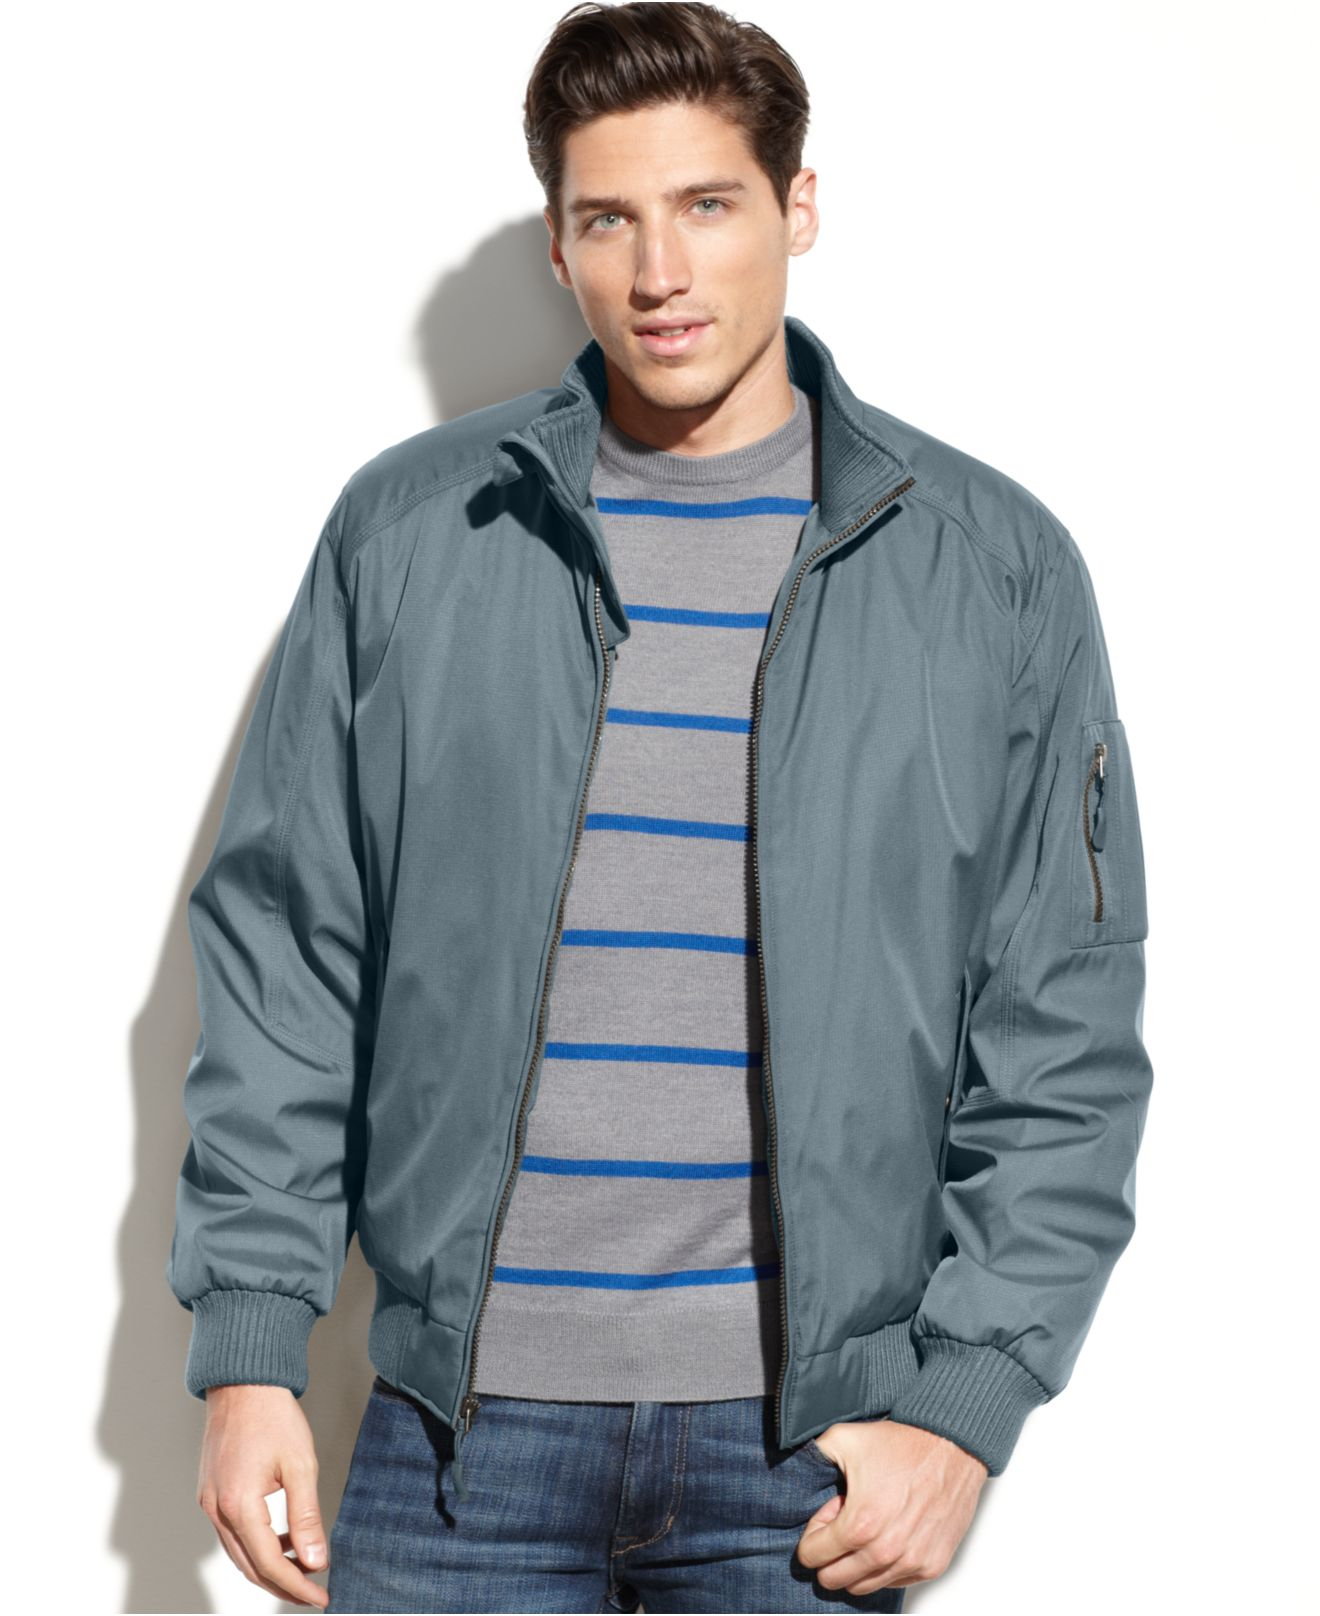 Calvin Klein Ripstop Bomber Jacket in Pewter (Gray) for Men - Lyst